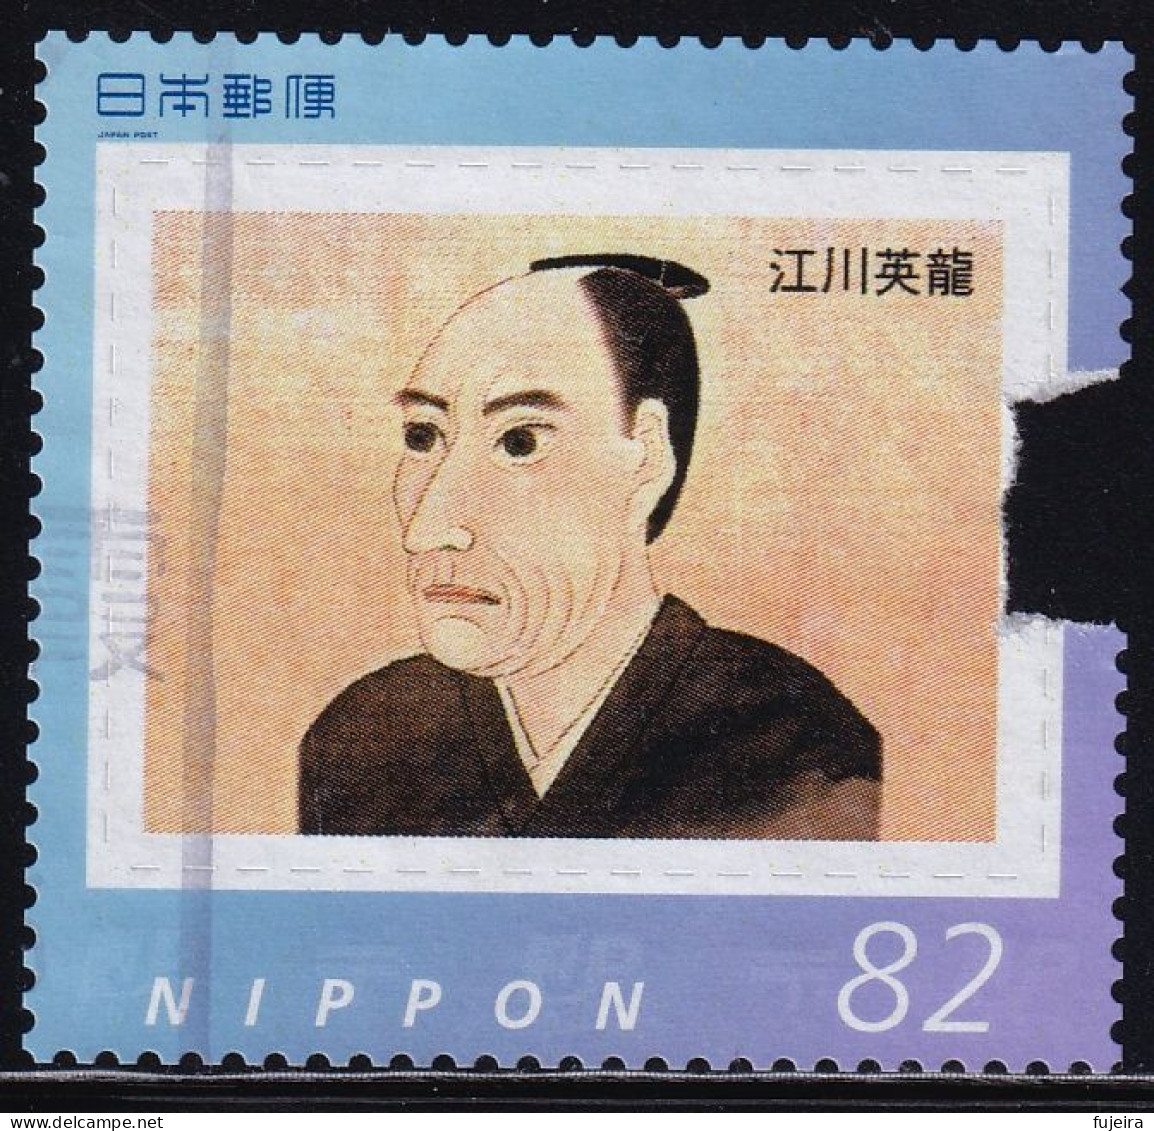 Japan Personalized Stamp, Hidetatsu Egawa (jpv9504) Used - Gebruikt